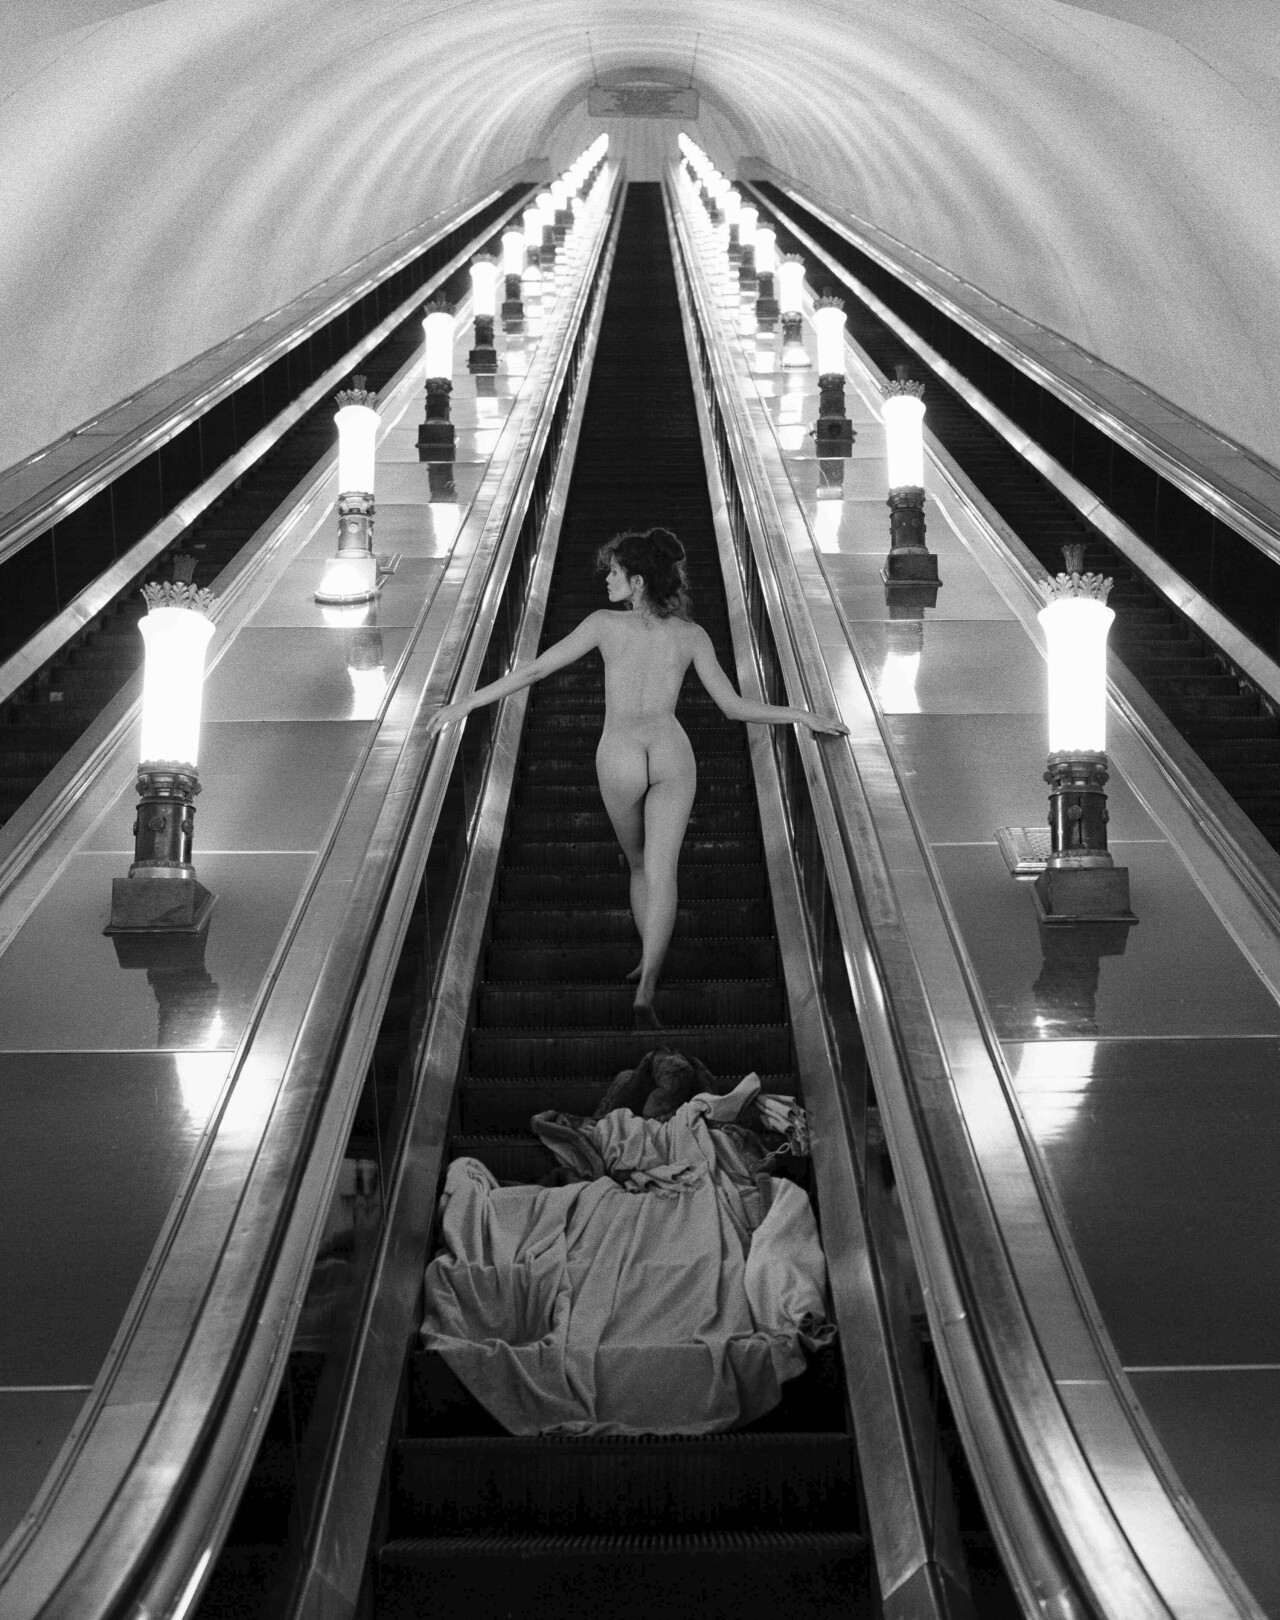 Московский метрополитен, 1989. Фотограф Патрик Личфилд